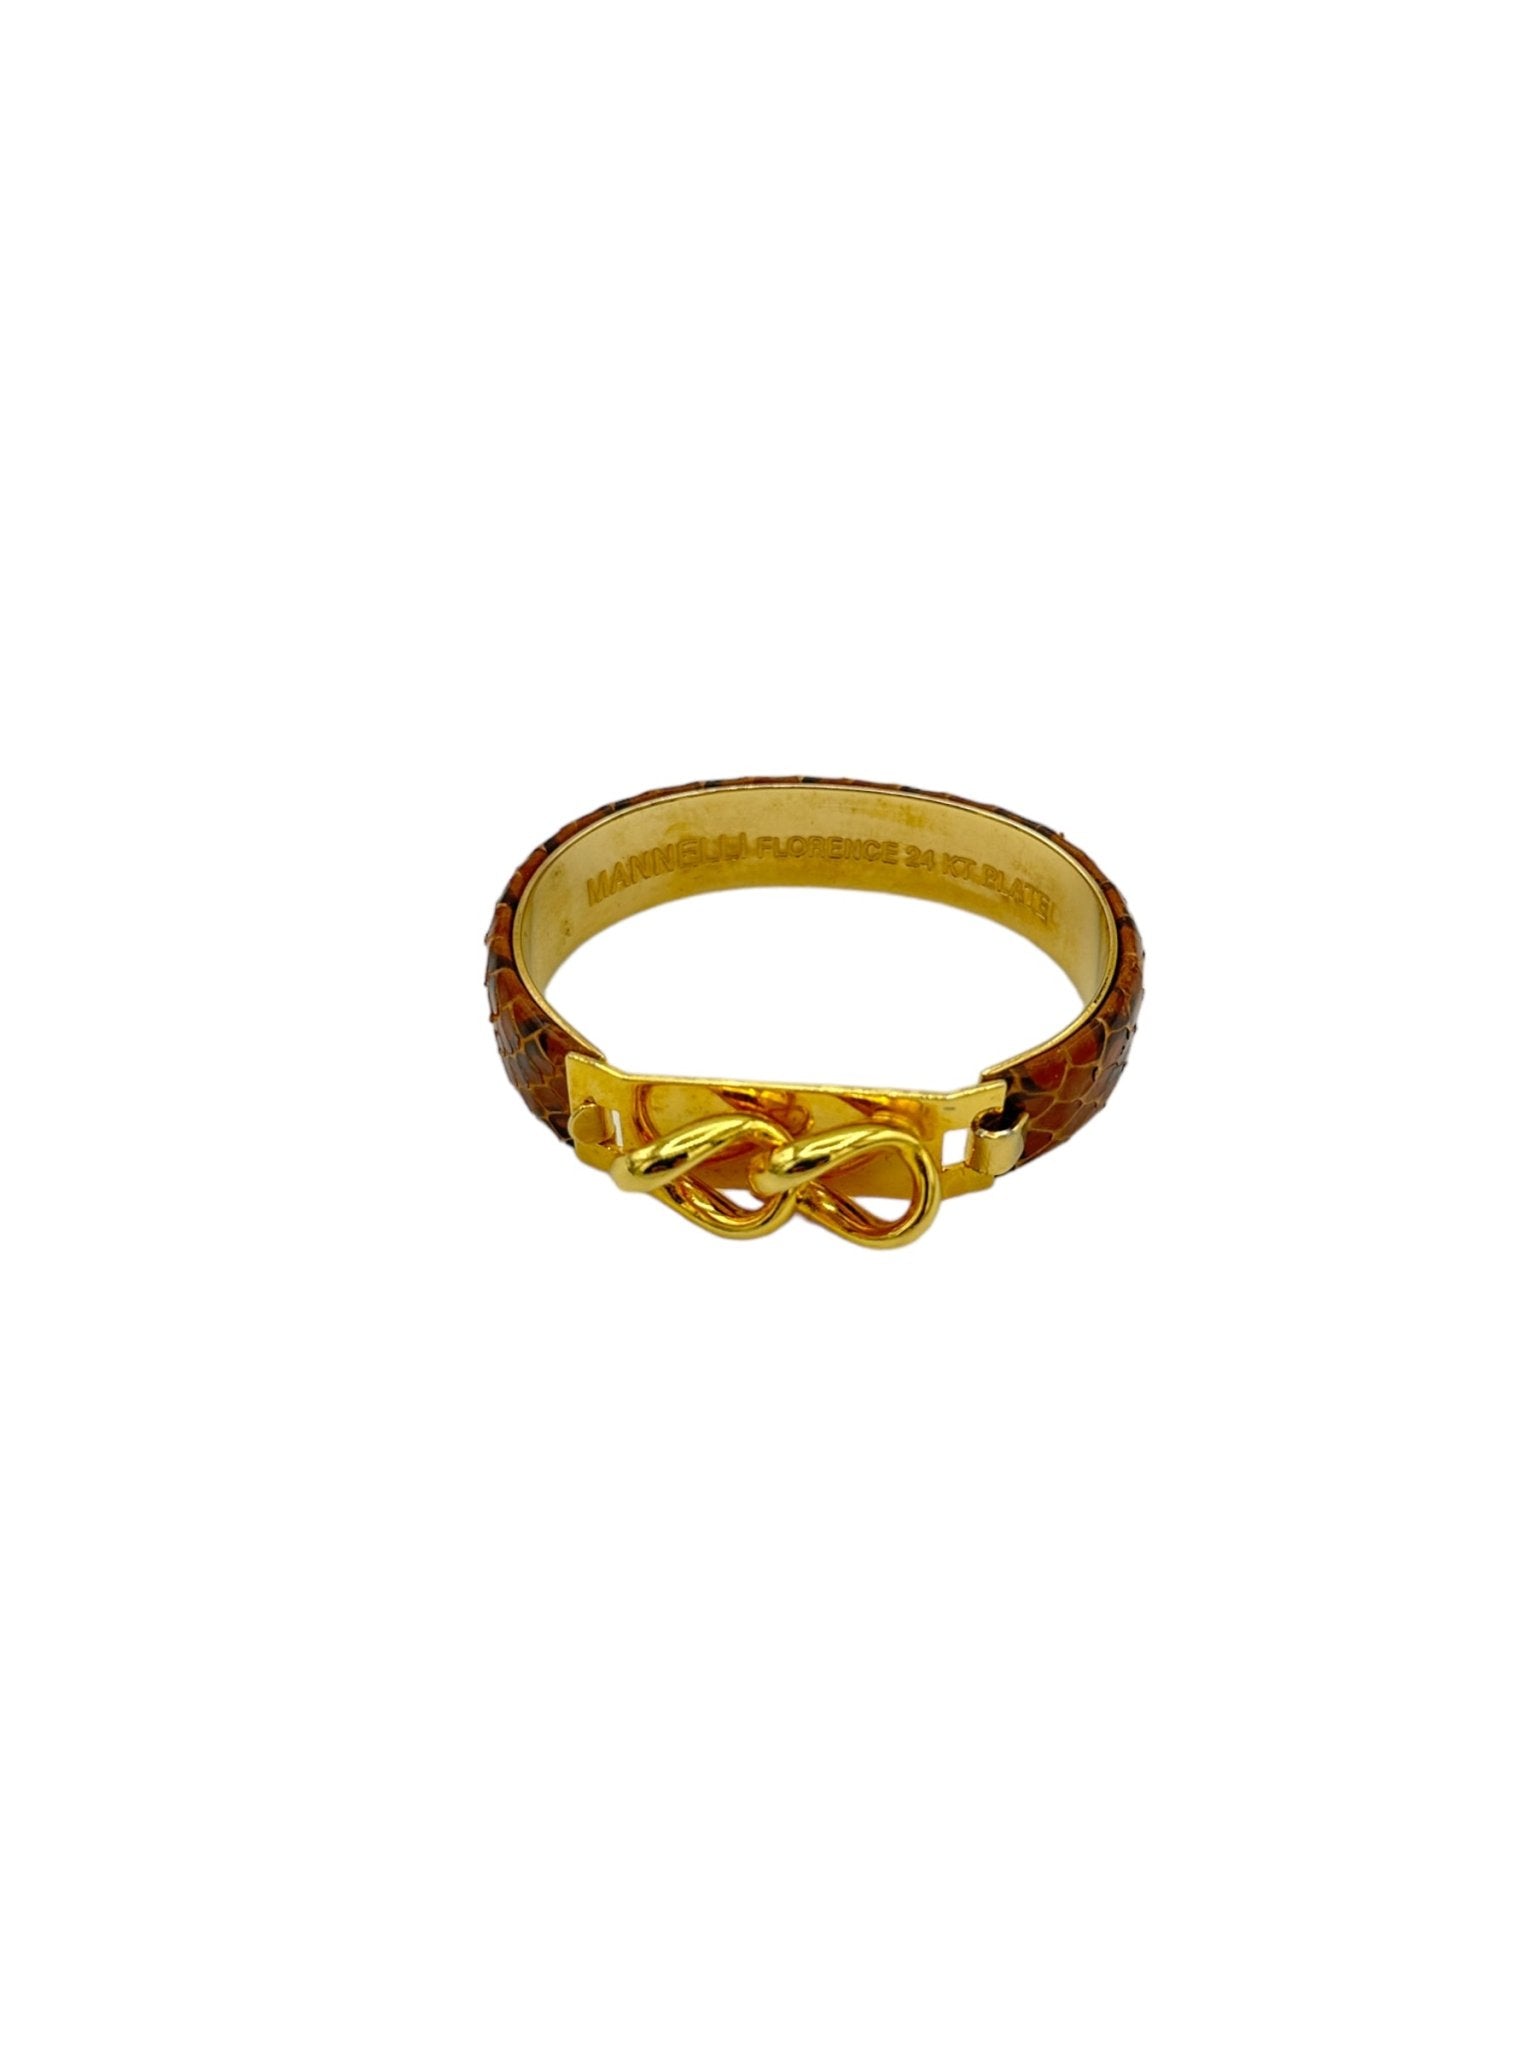 Sapir Bachar Gold Synthesis Bracelet | goop